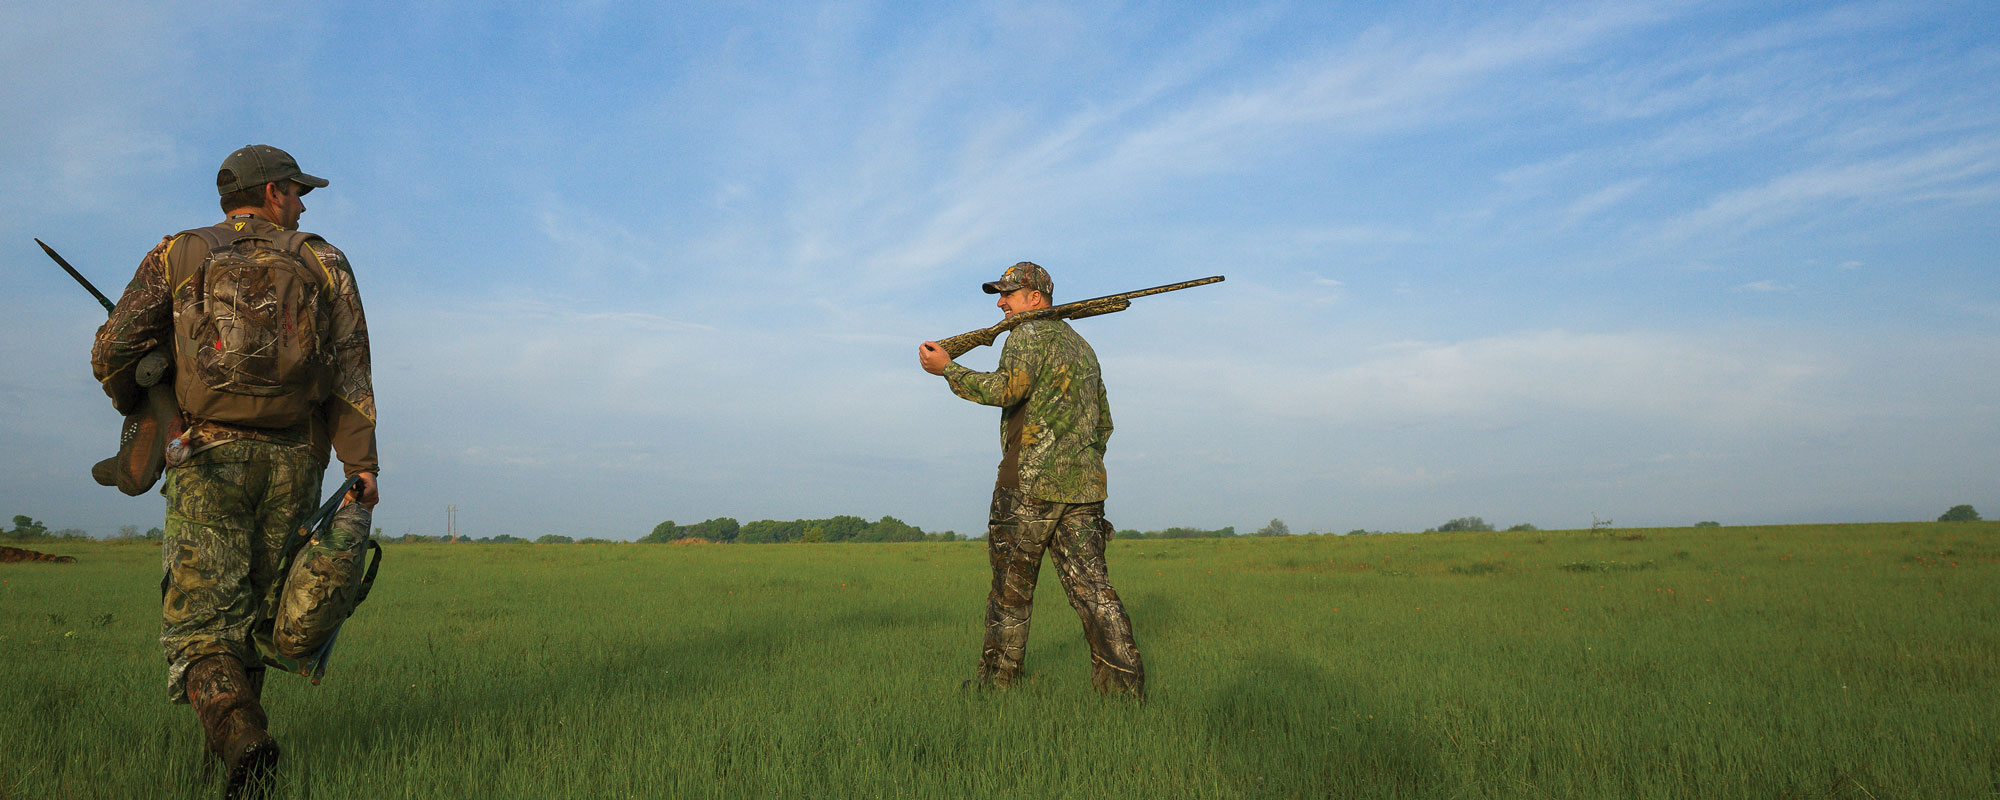 Hunters walking in field with guns